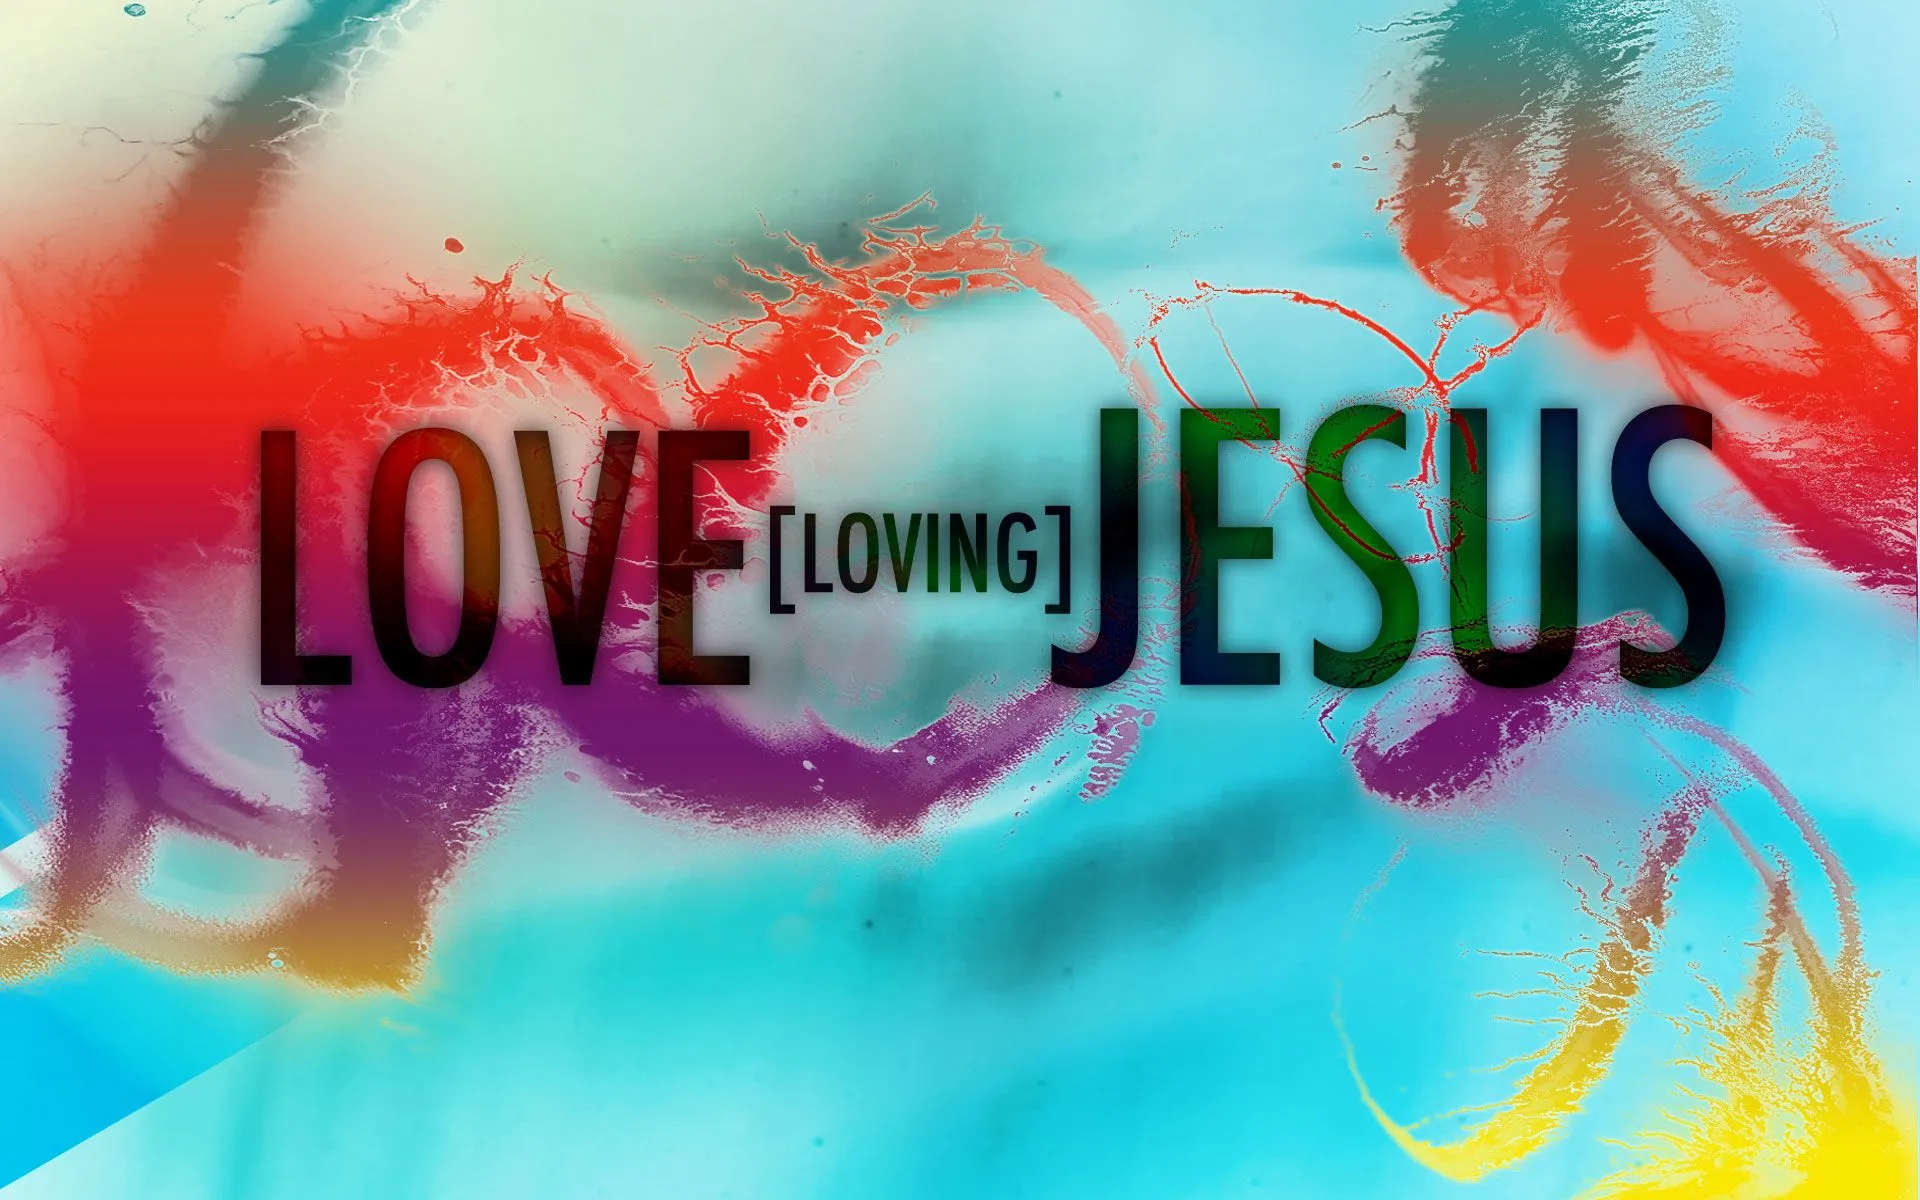 blue wallpaper | Love Loving Jesus!